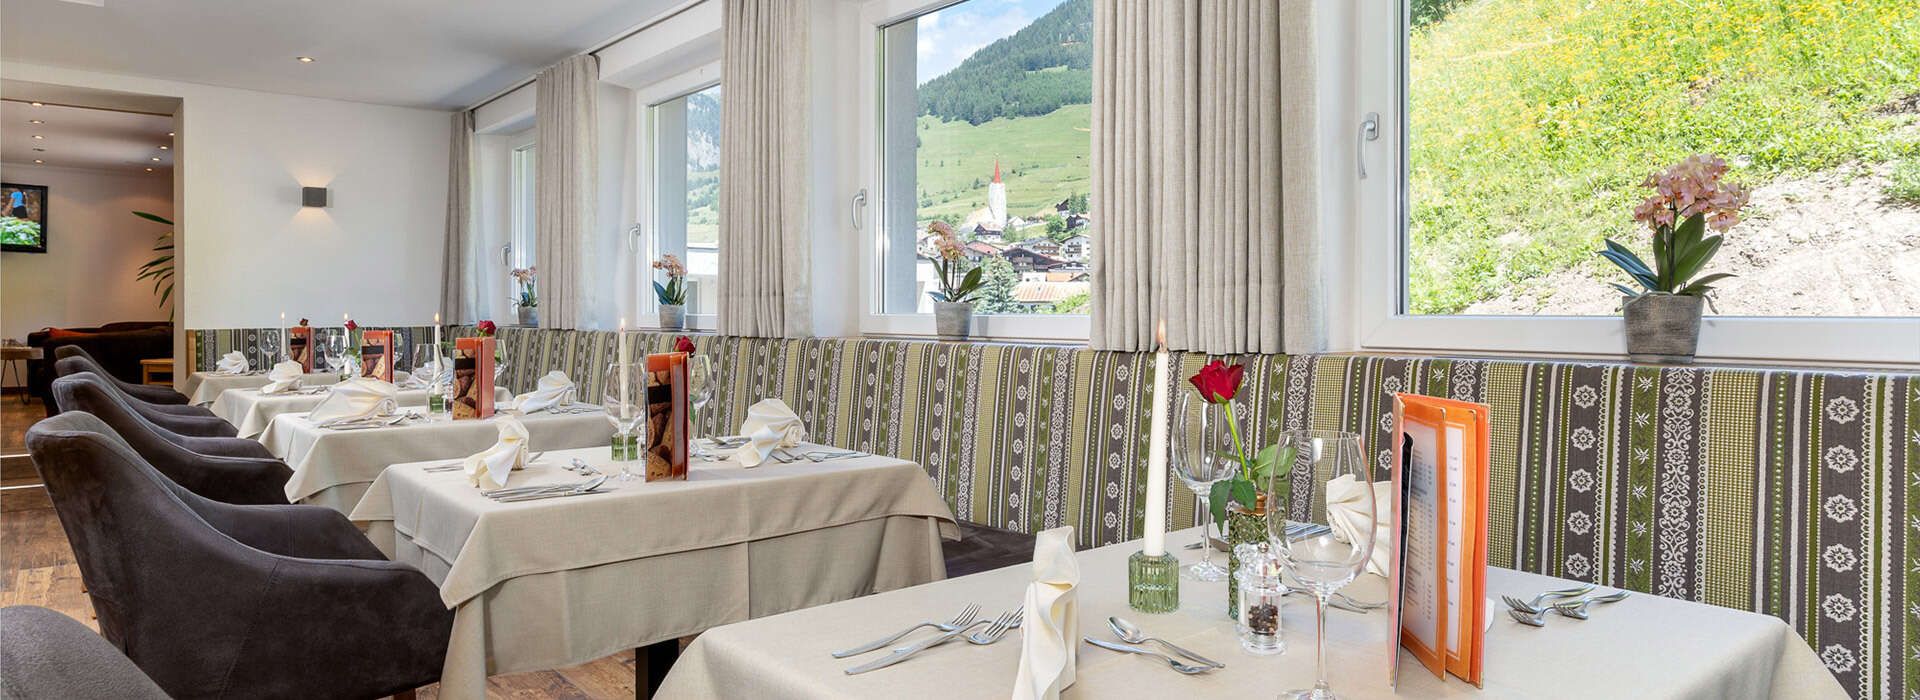 Restaurant vom Hotel Schlossberg Nauders